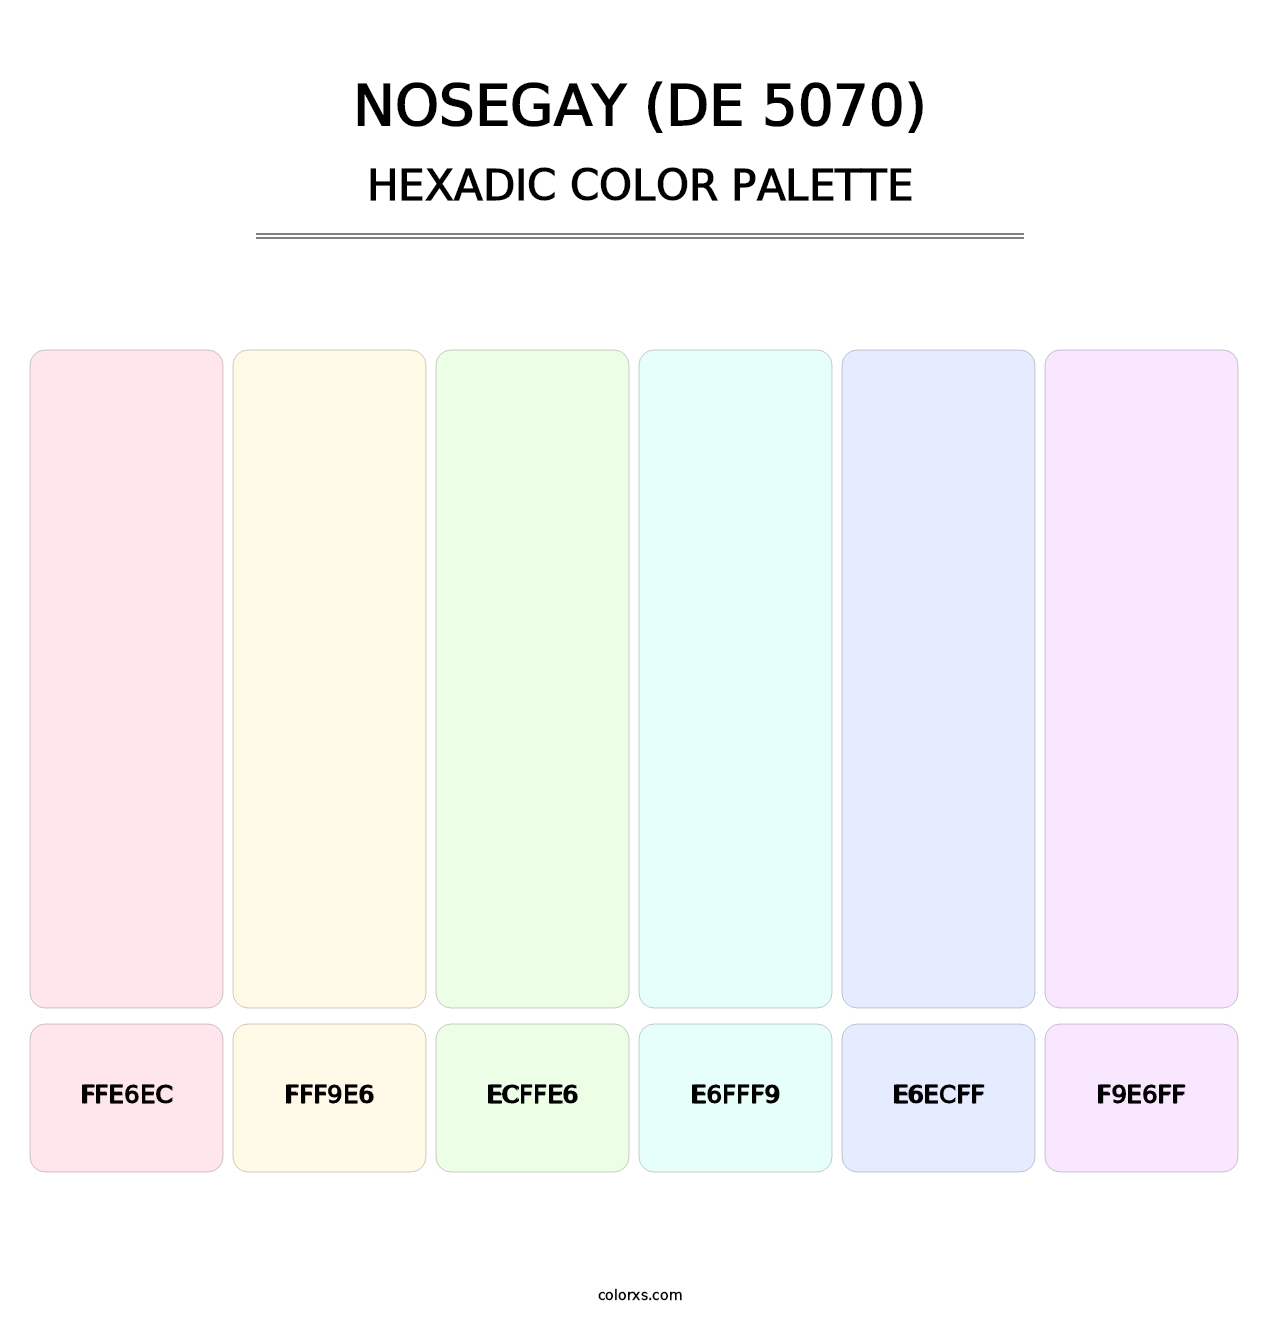 Nosegay (DE 5070) - Hexadic Color Palette